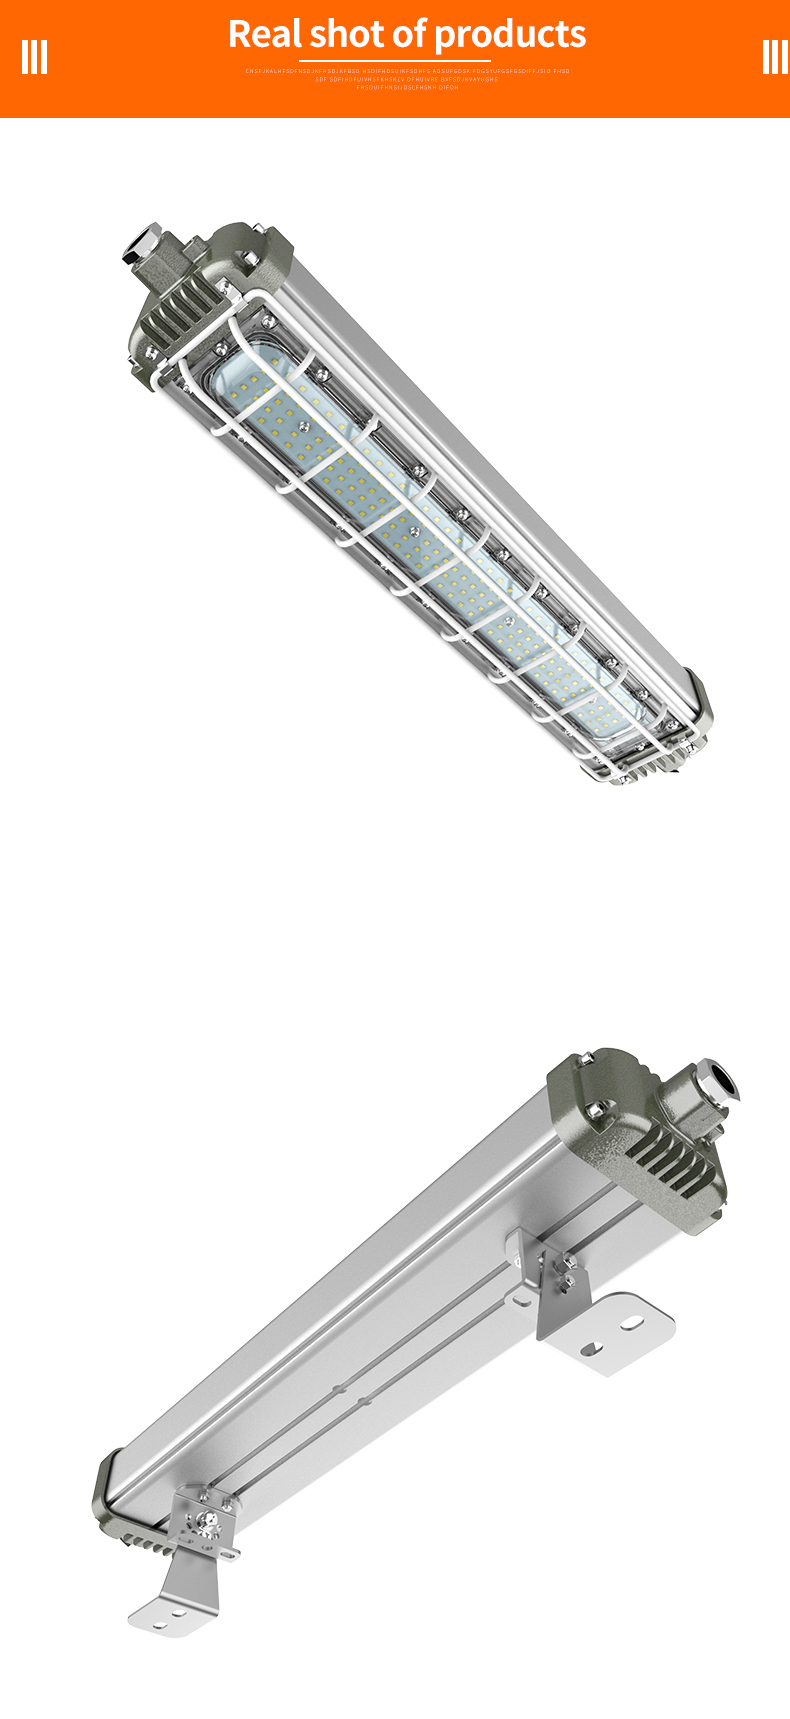 LED-Lamp